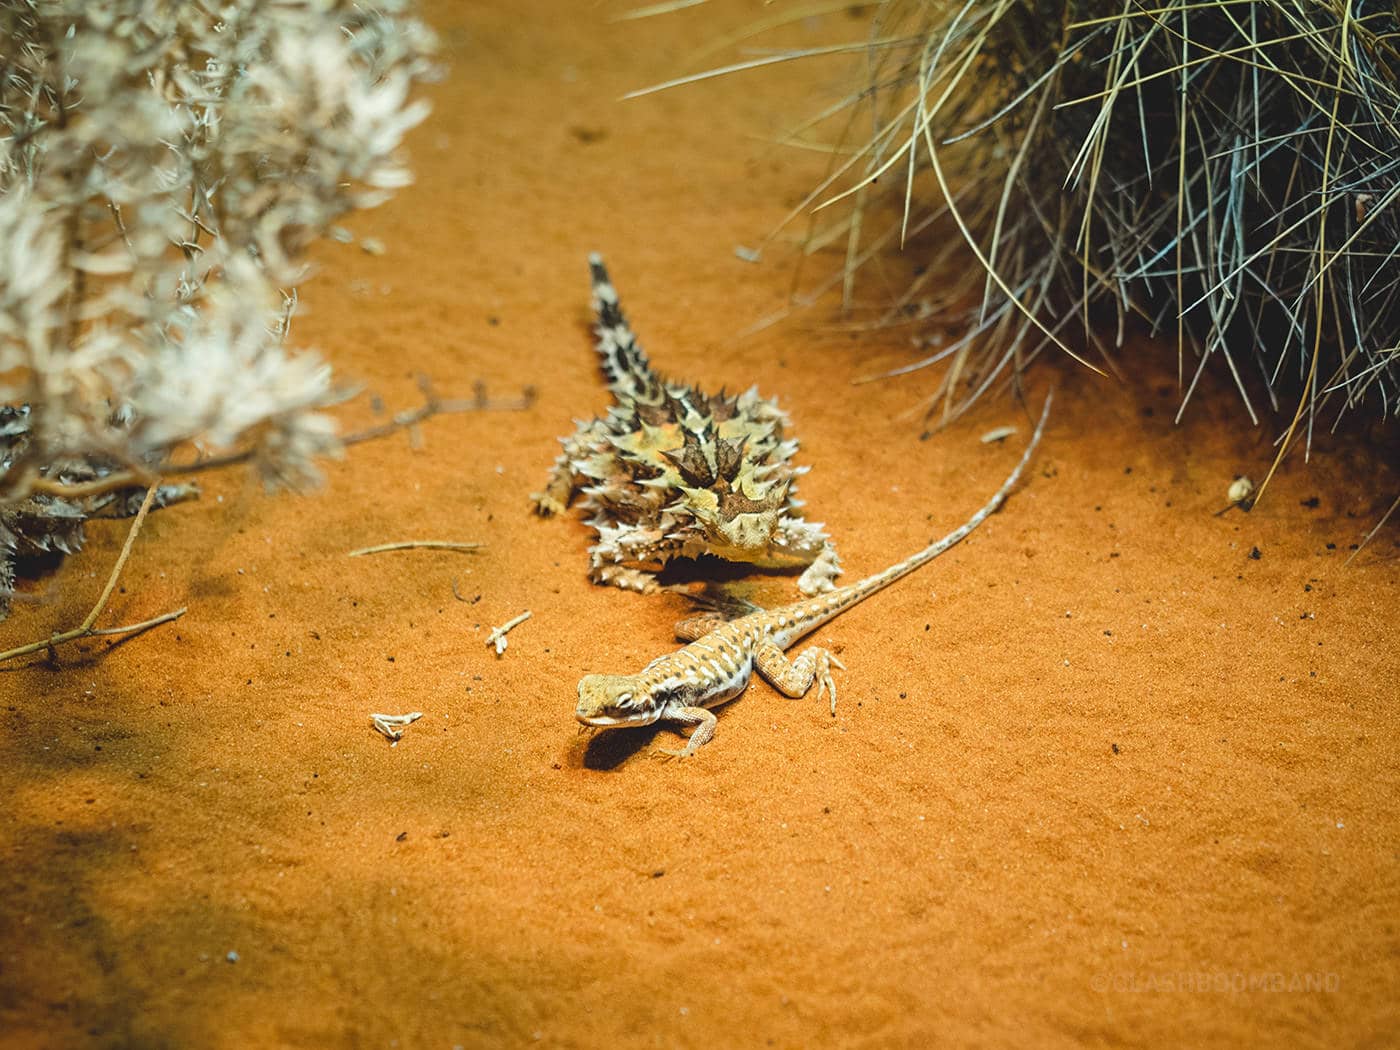 NT Australia - Central netted dragon & Thorny devil